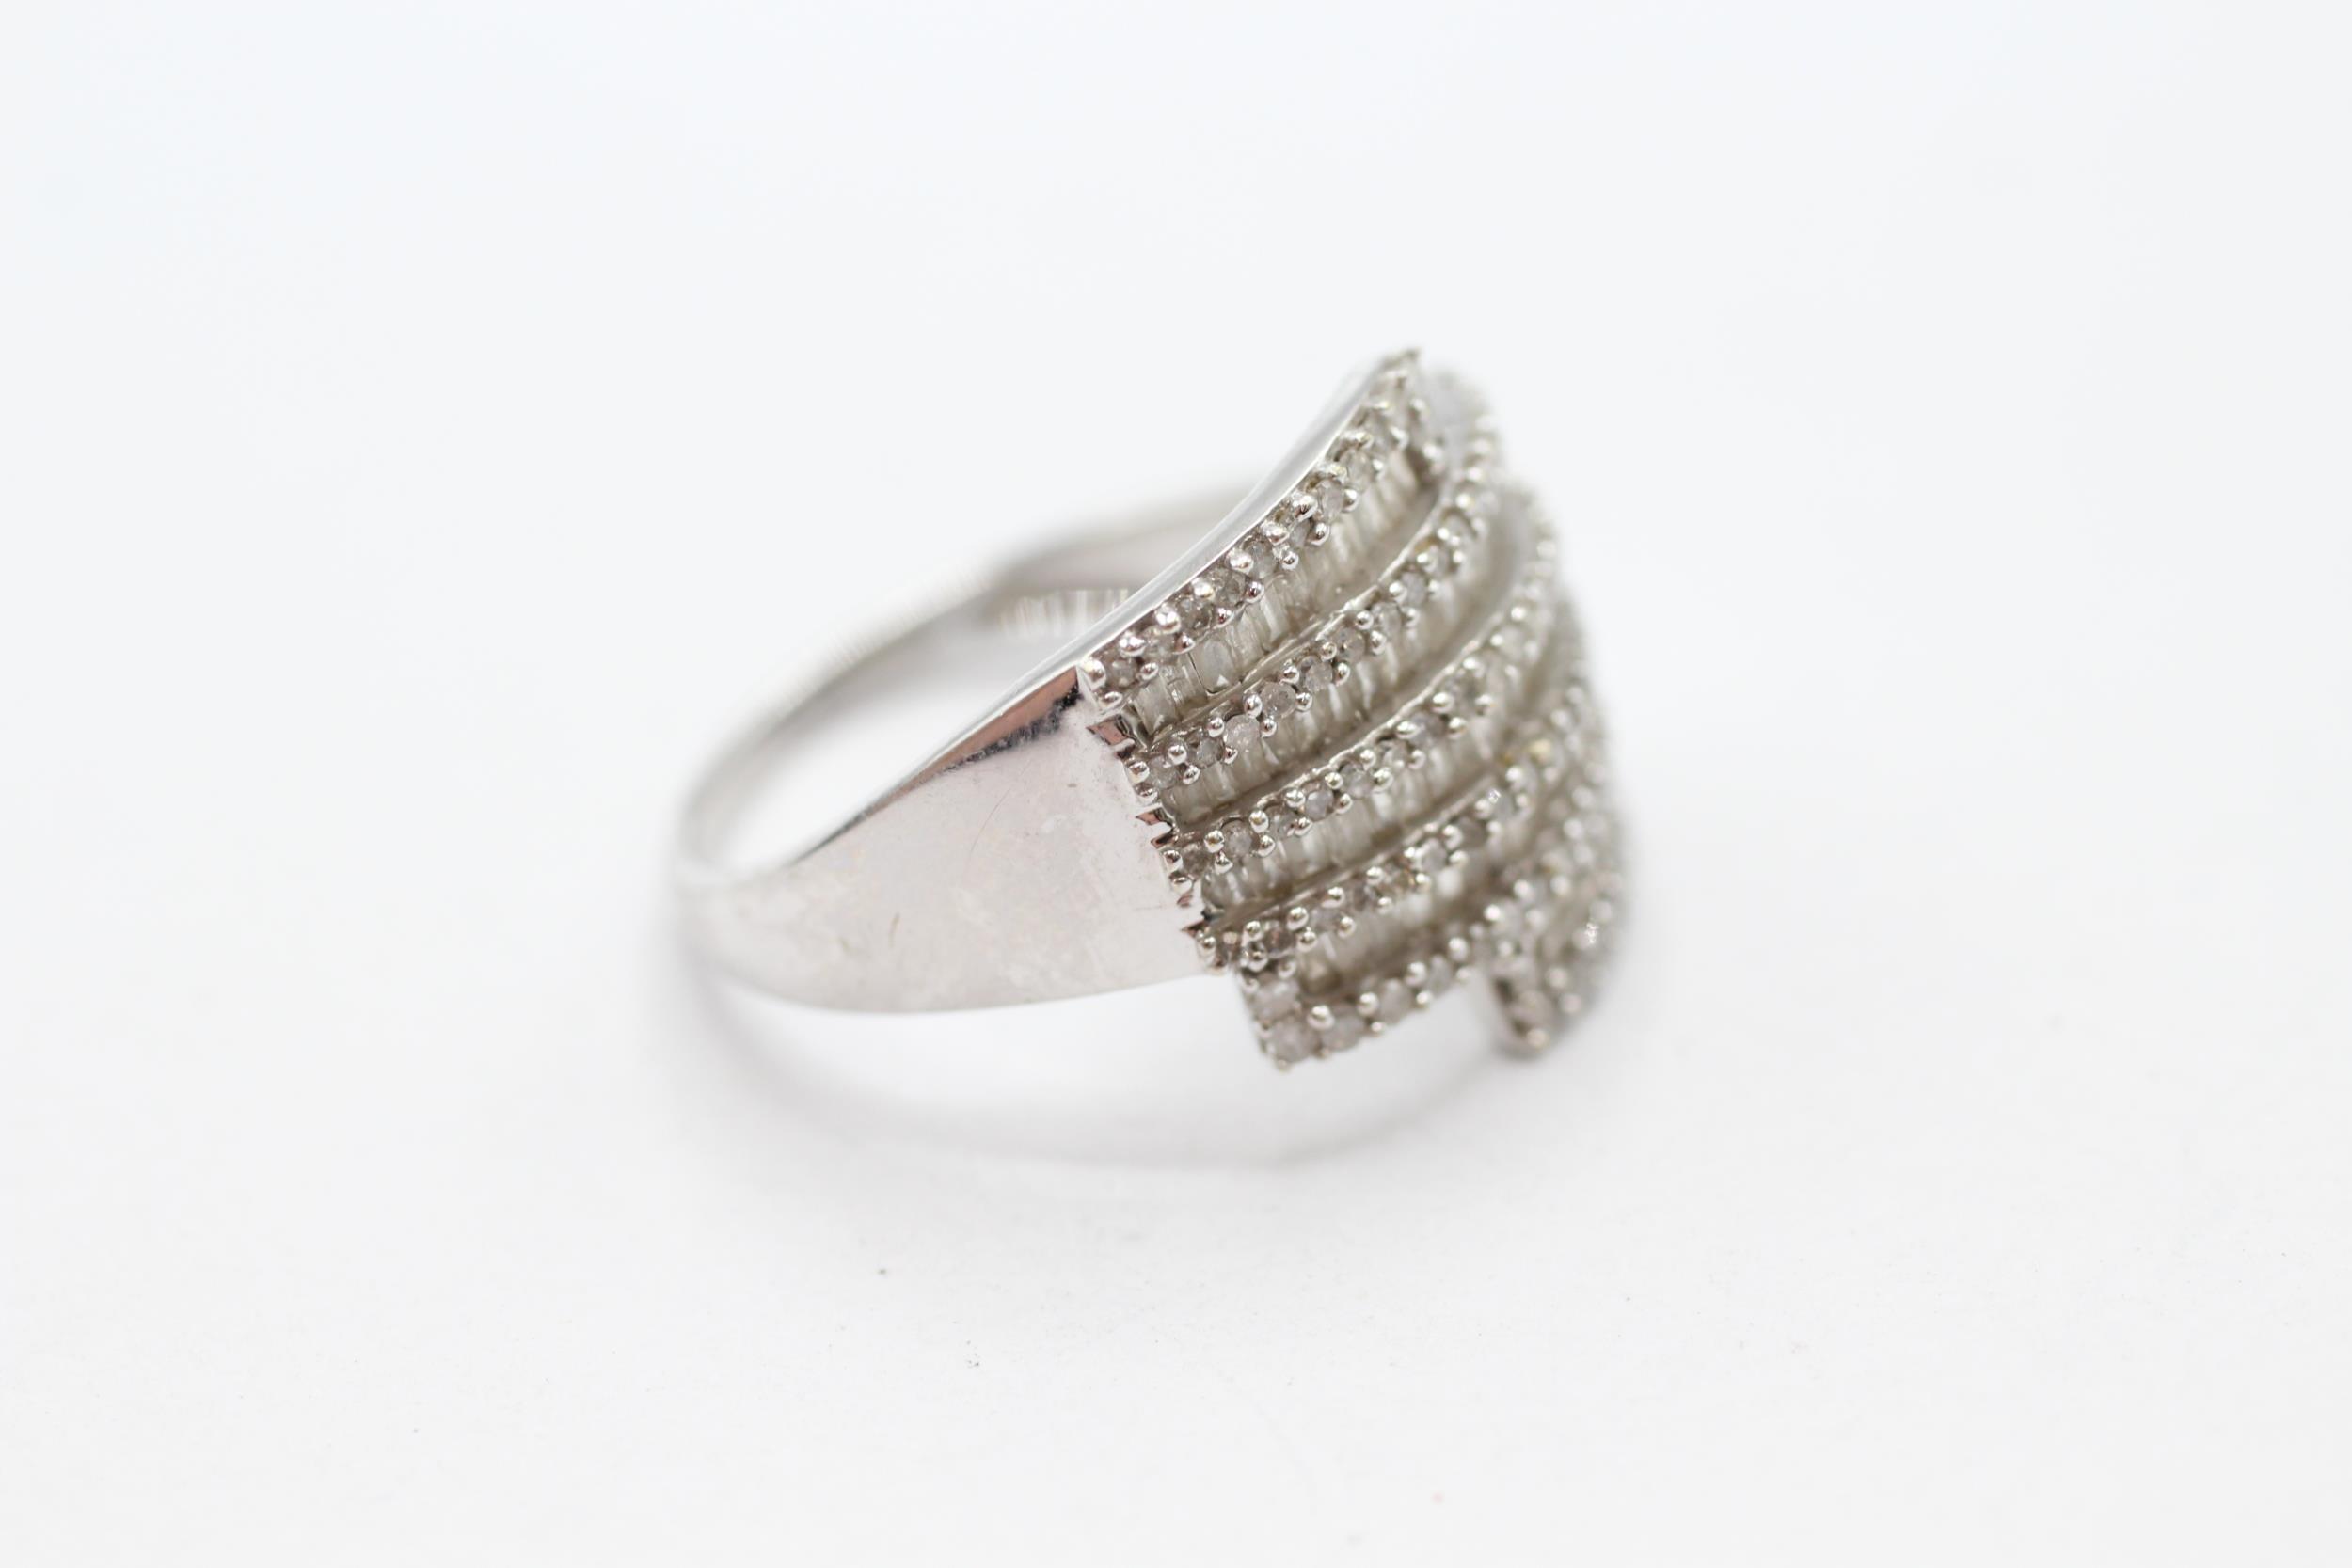 9ct white gold vari-cut diamond dress ring Size Q 4.8 g - Image 2 of 4